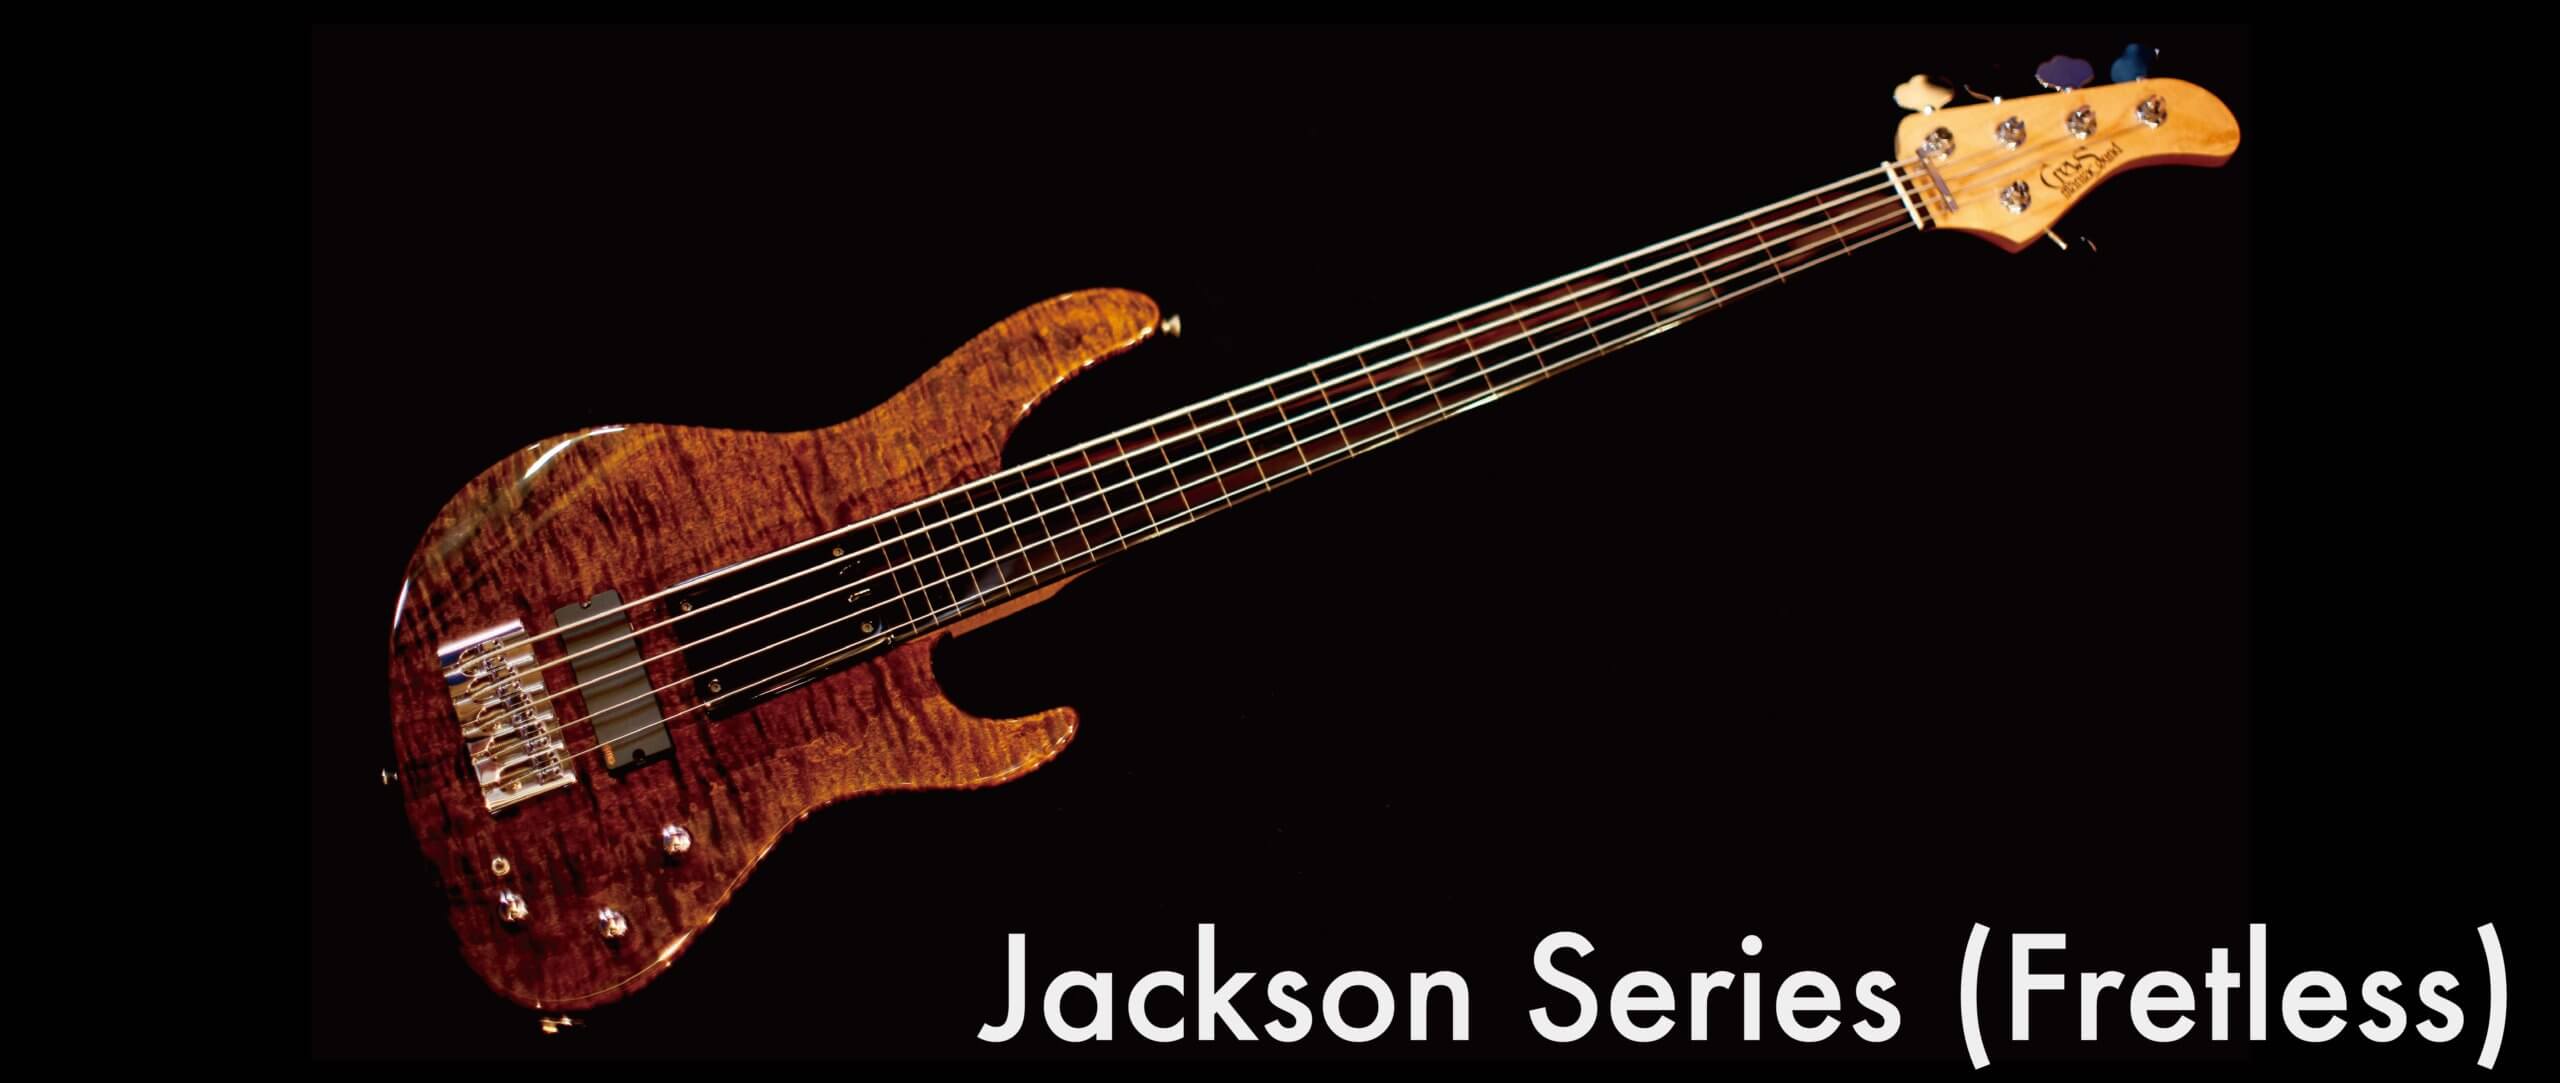 Jackson4/5 Series